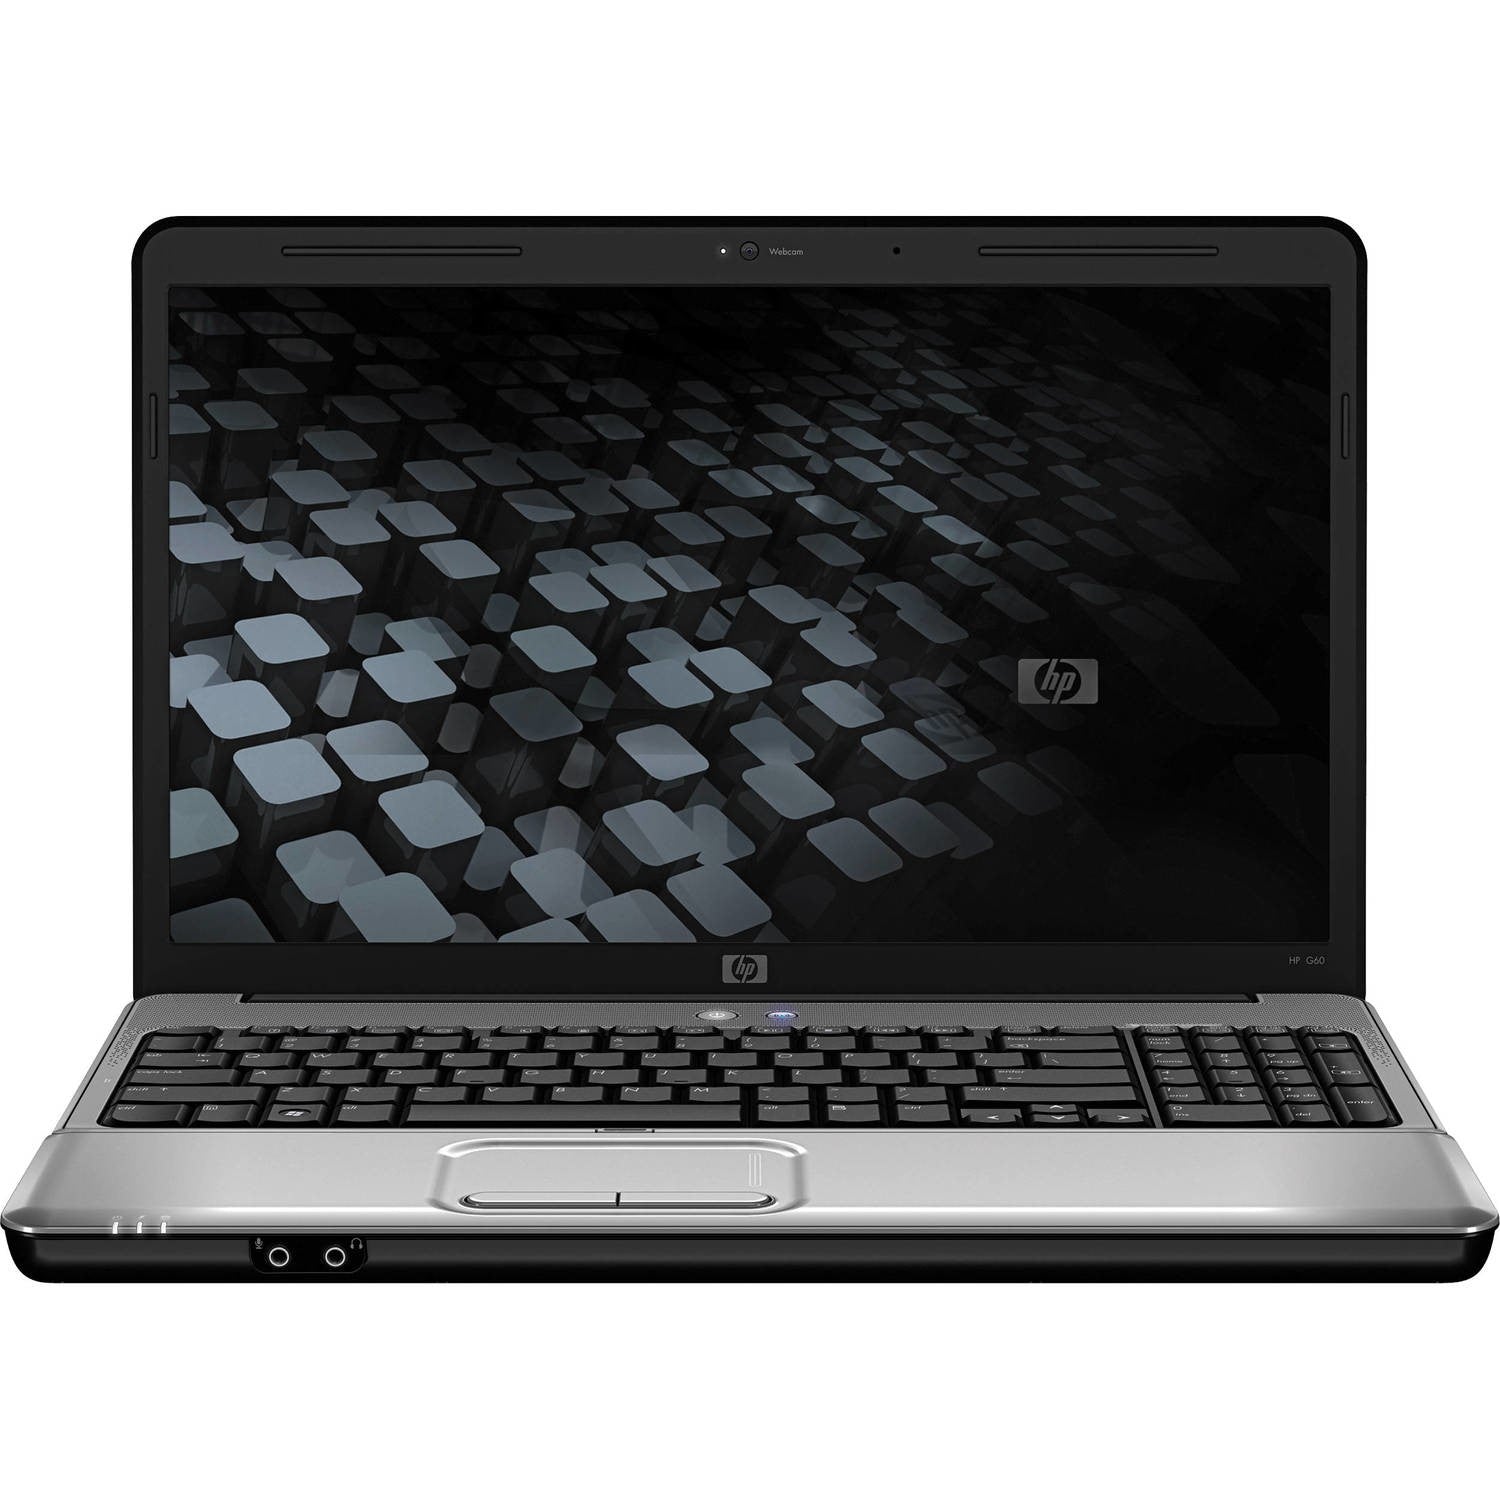 HP G61-410SA Notebook, Intel Celeron T3100, 3GB, 320GB, 15.6" - Black